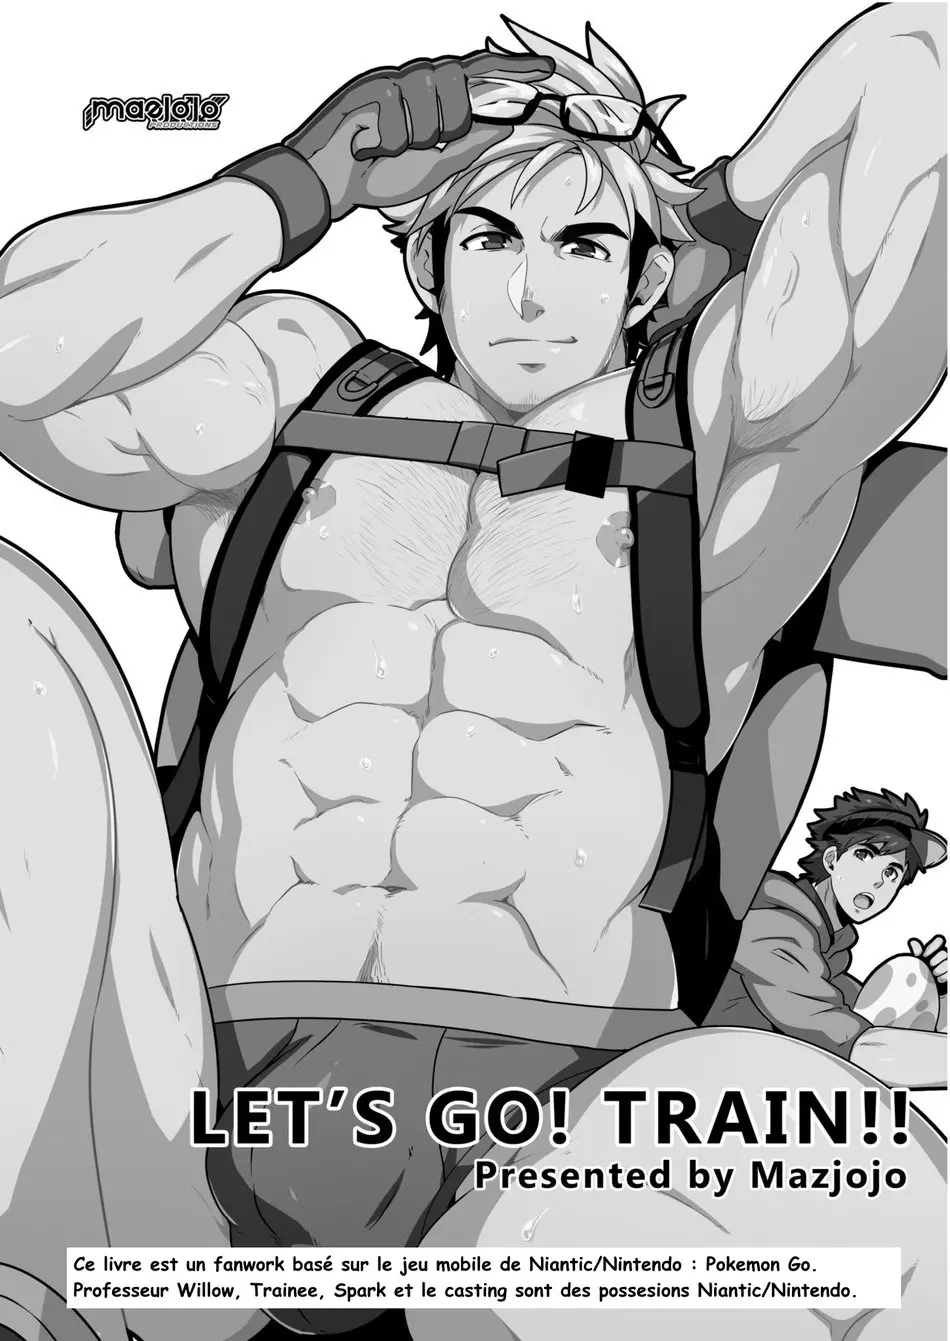 Let's GO! TRAIN!!